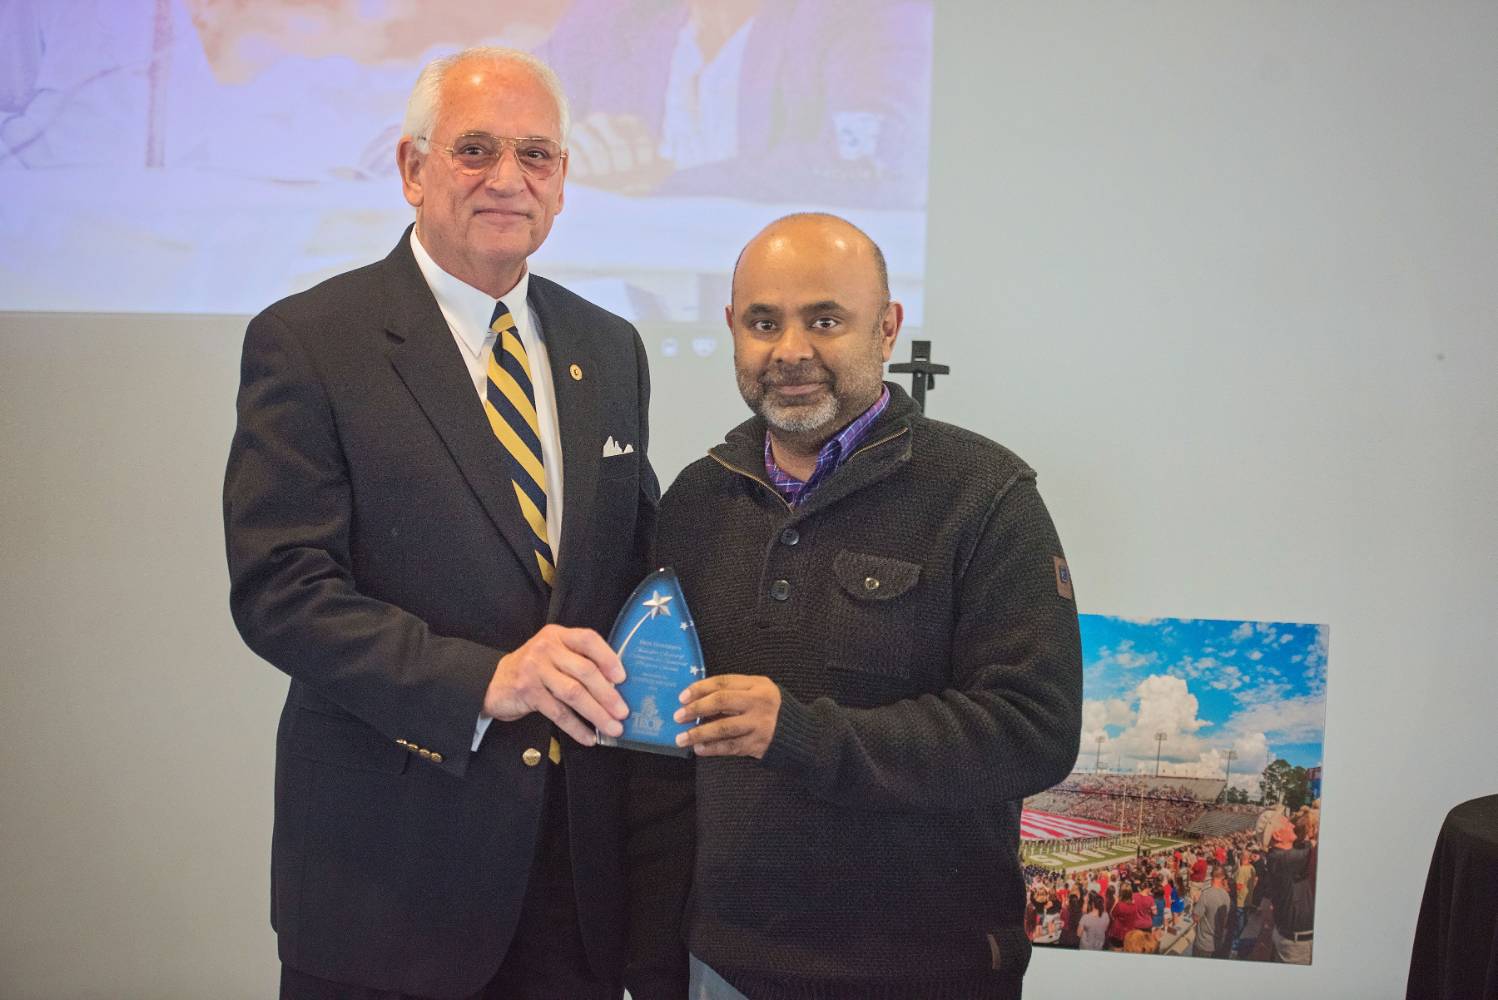 2018 Chancellor's Award of Distinction for Sponsored Program Success awarded to Dr. Govind Menon